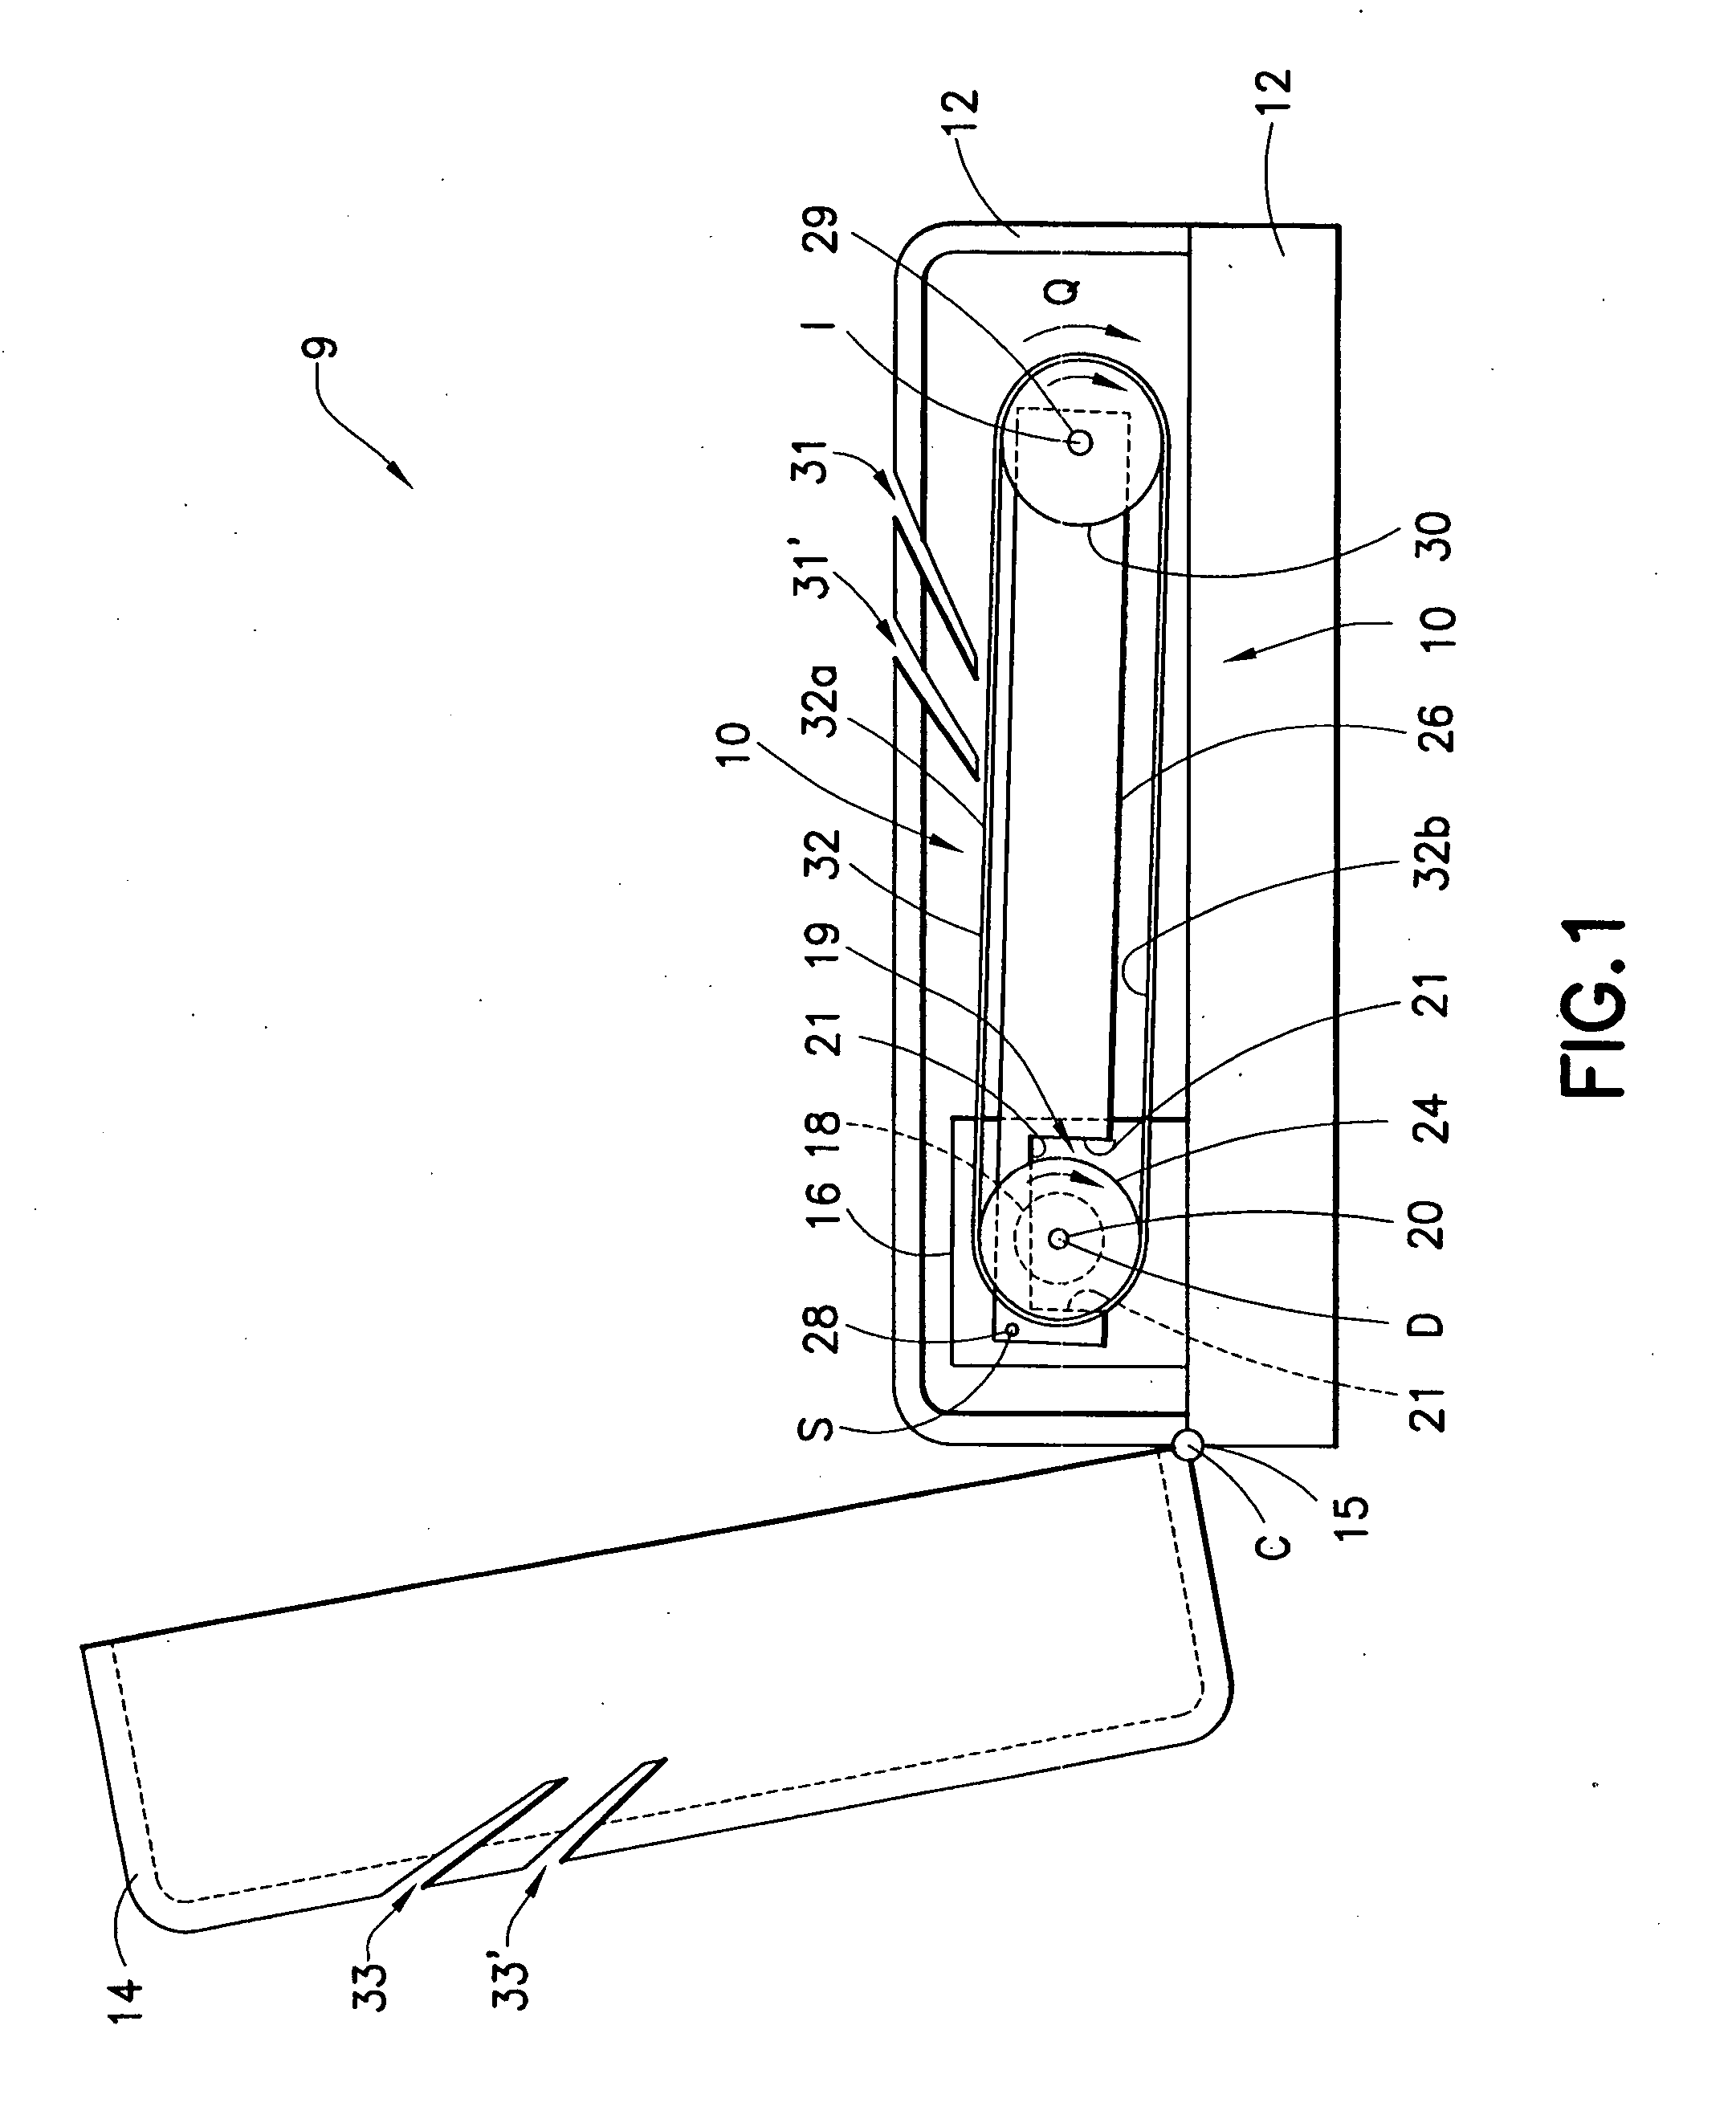 Knife sharpening apparatus